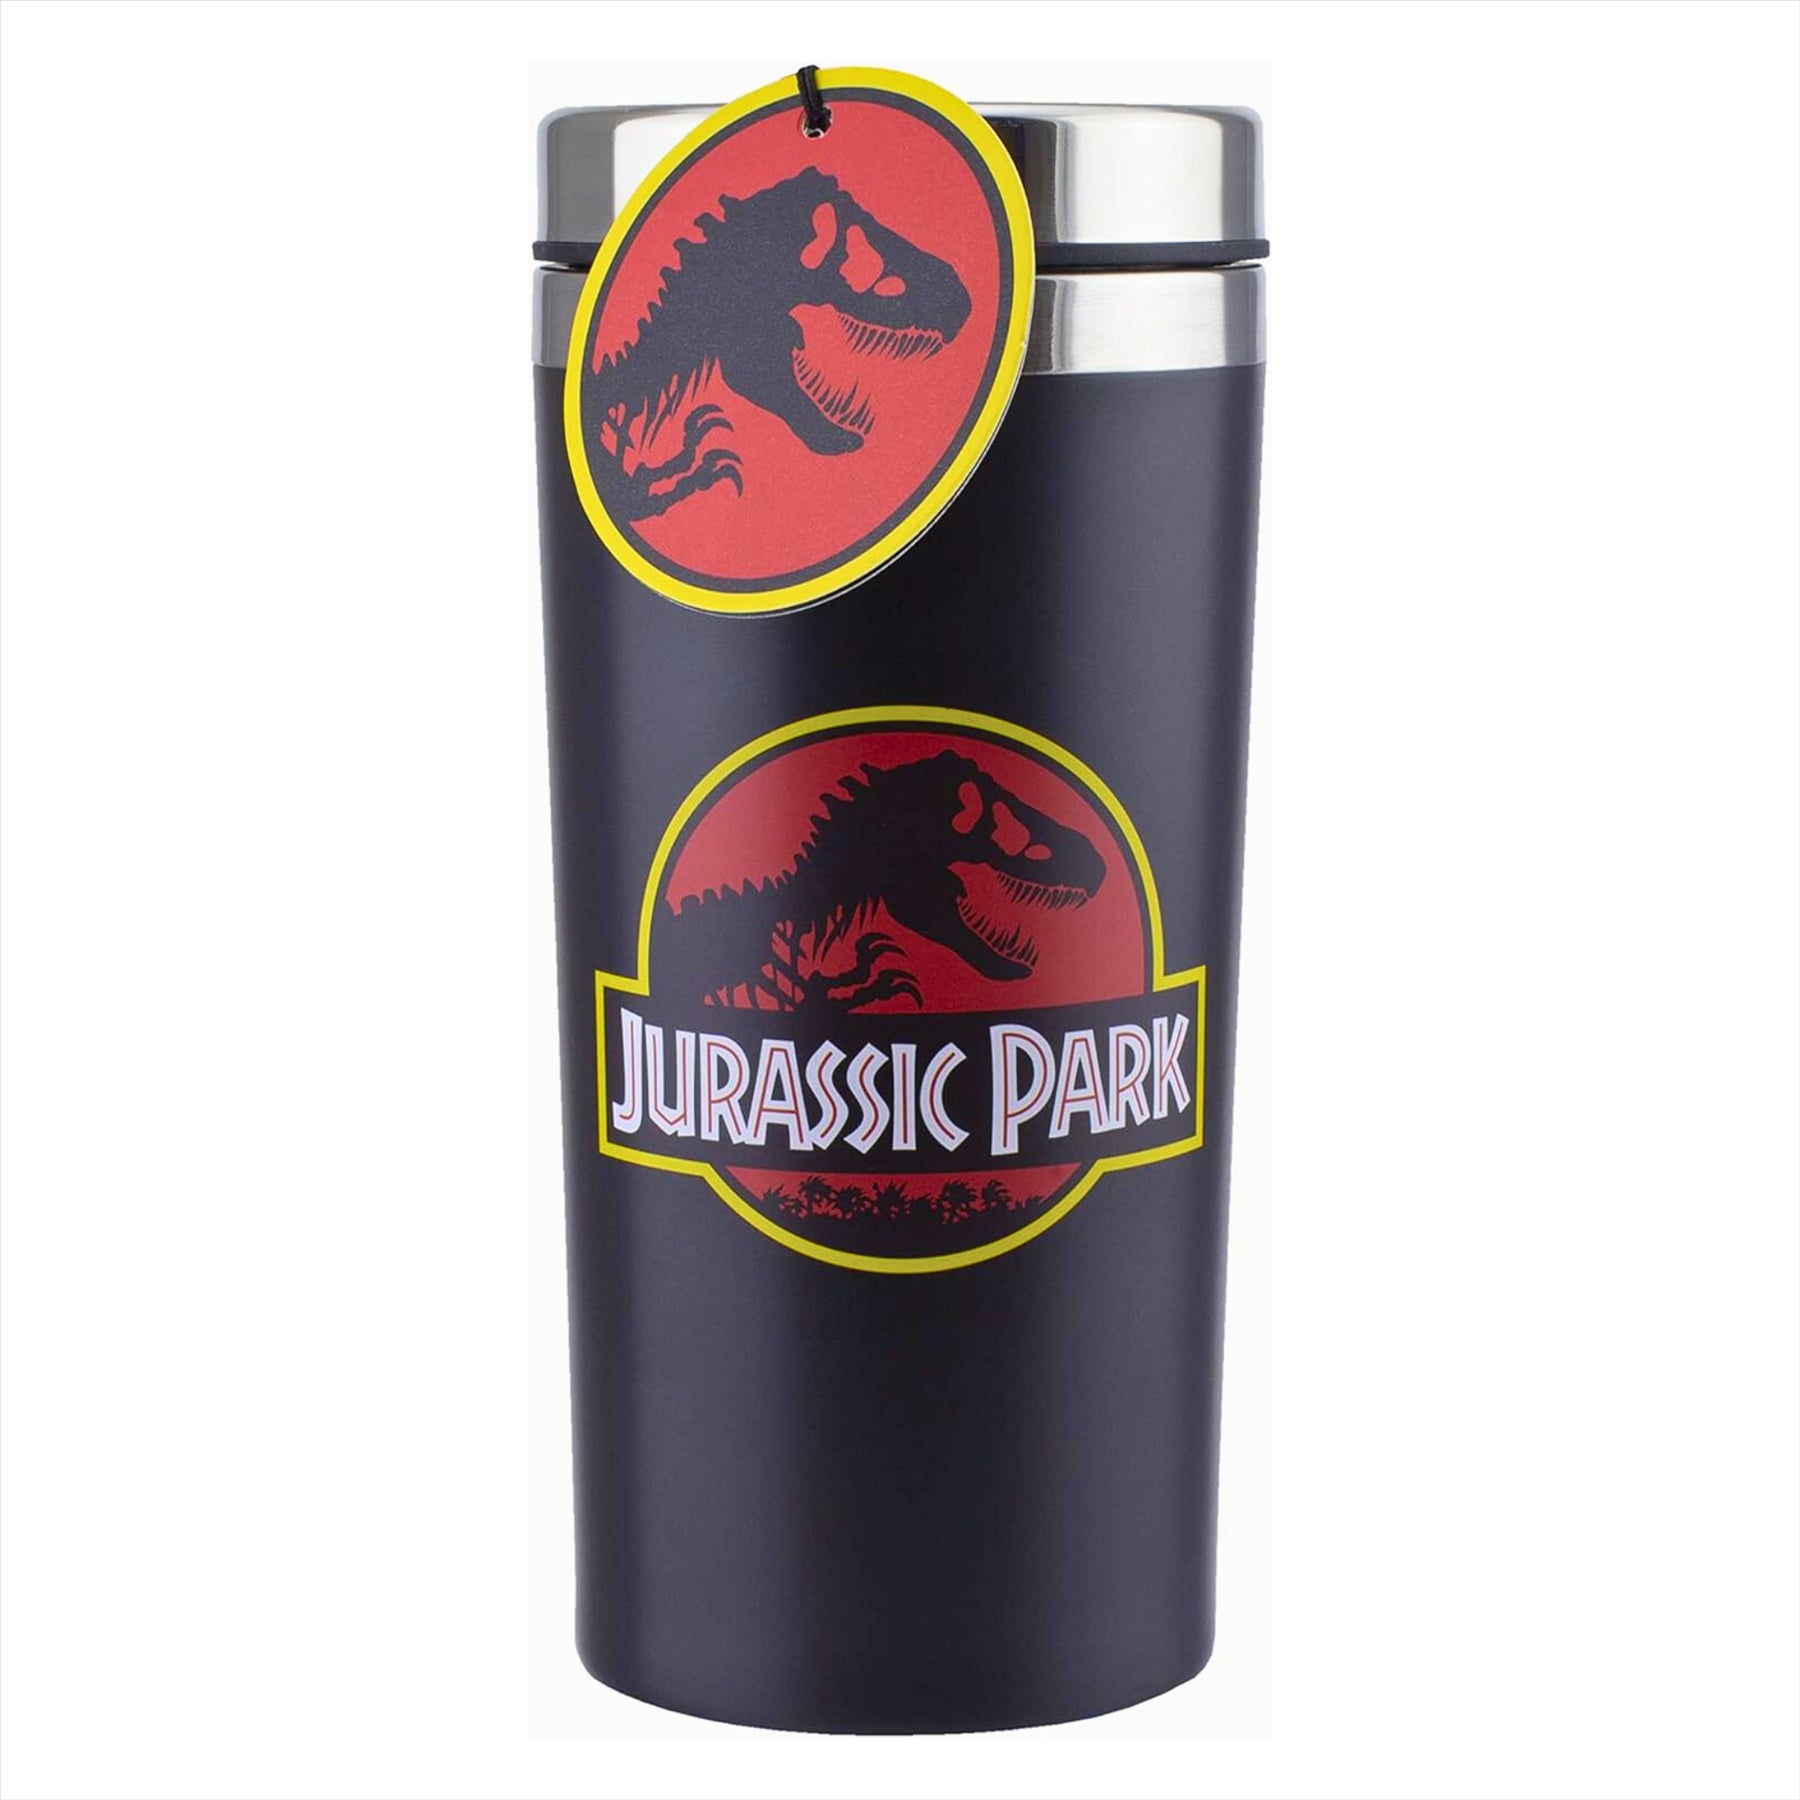 Jurassic Collectors Gift Set - Travel Mug, AIan Grant & Wrangler - Toptoys2u